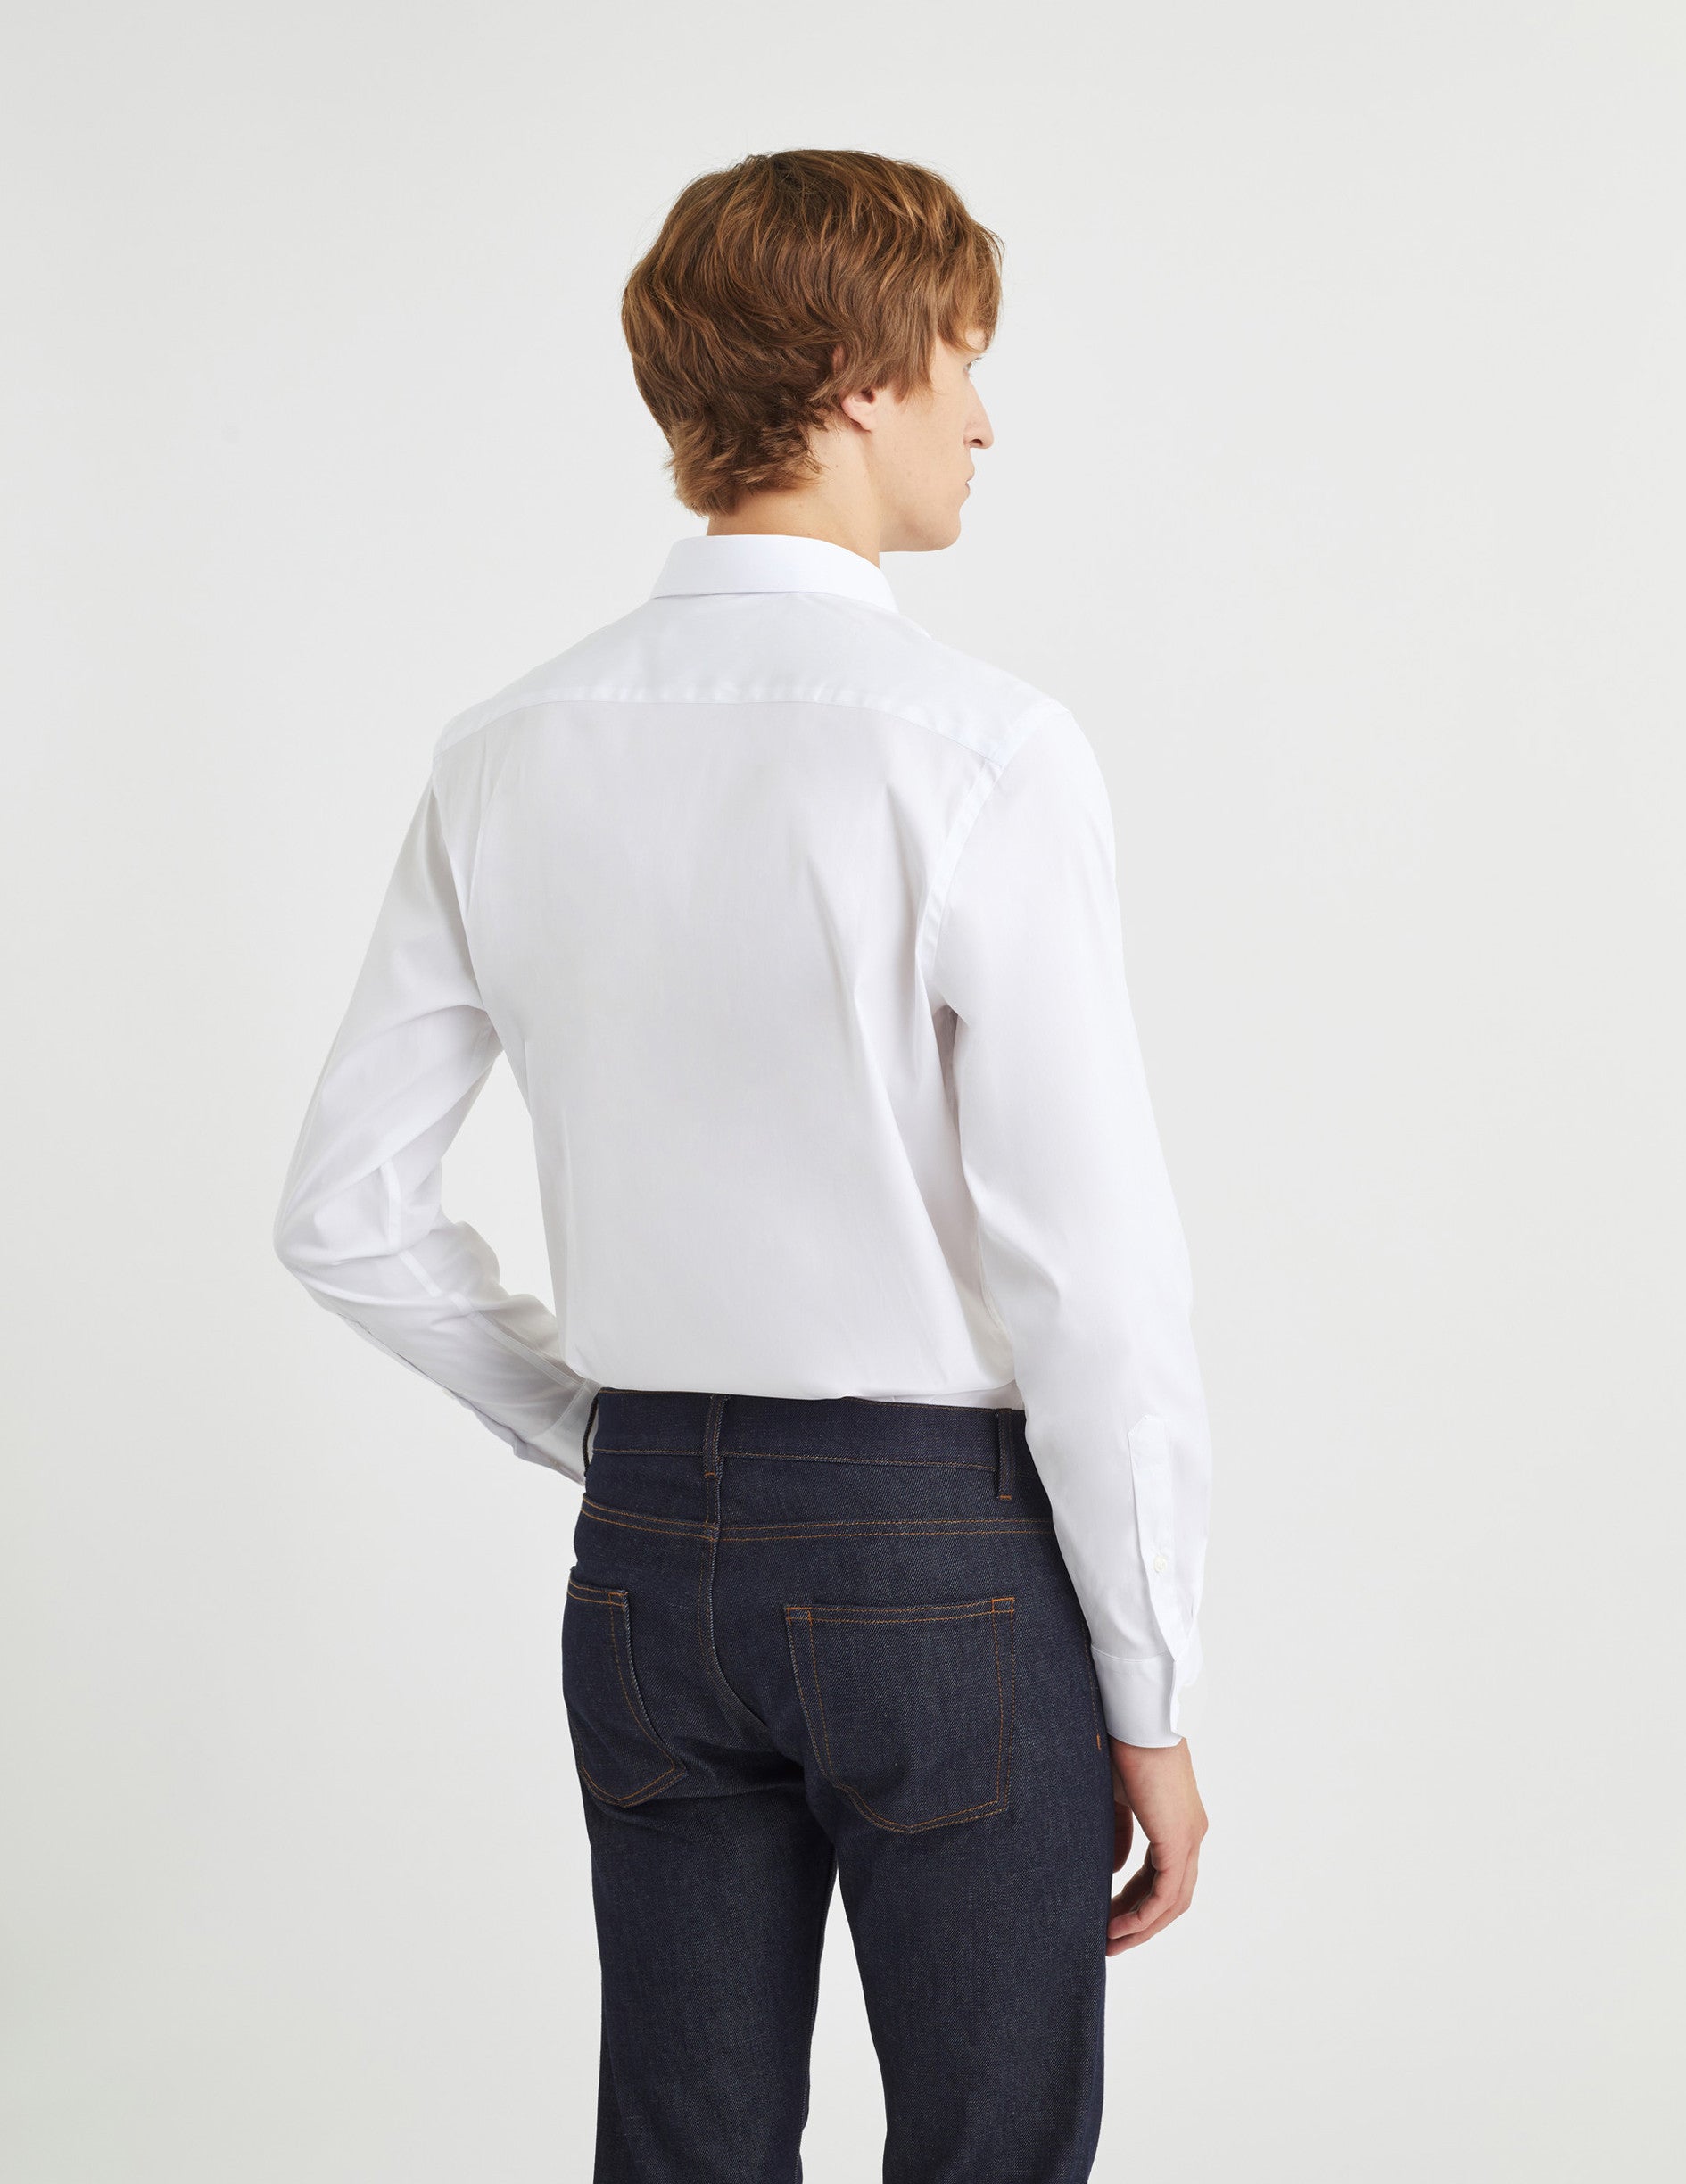 Semi-fitted white stretch shirt - Poplin - Figaret Collar